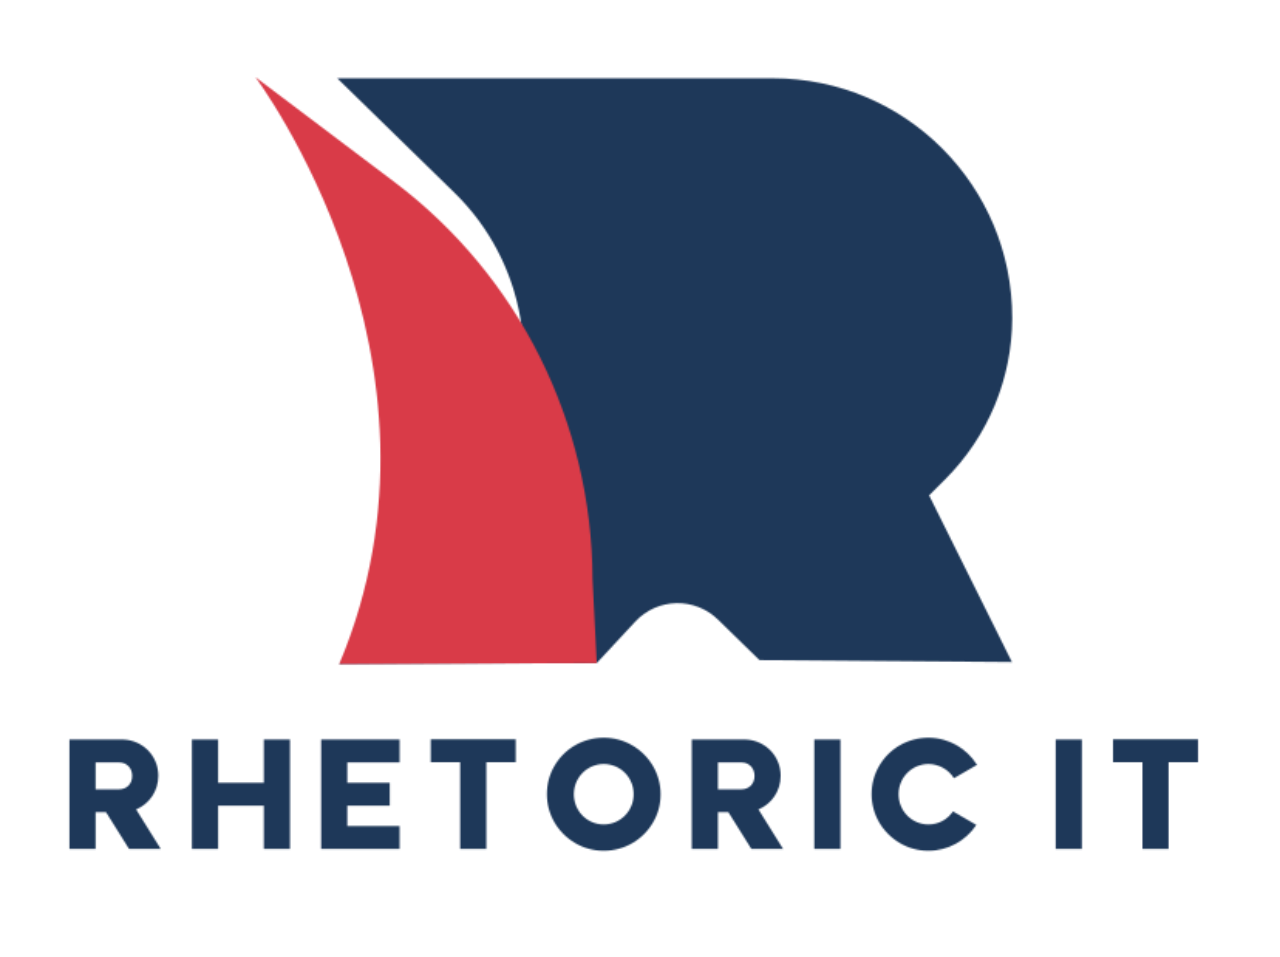 Rhetoric IT's logo